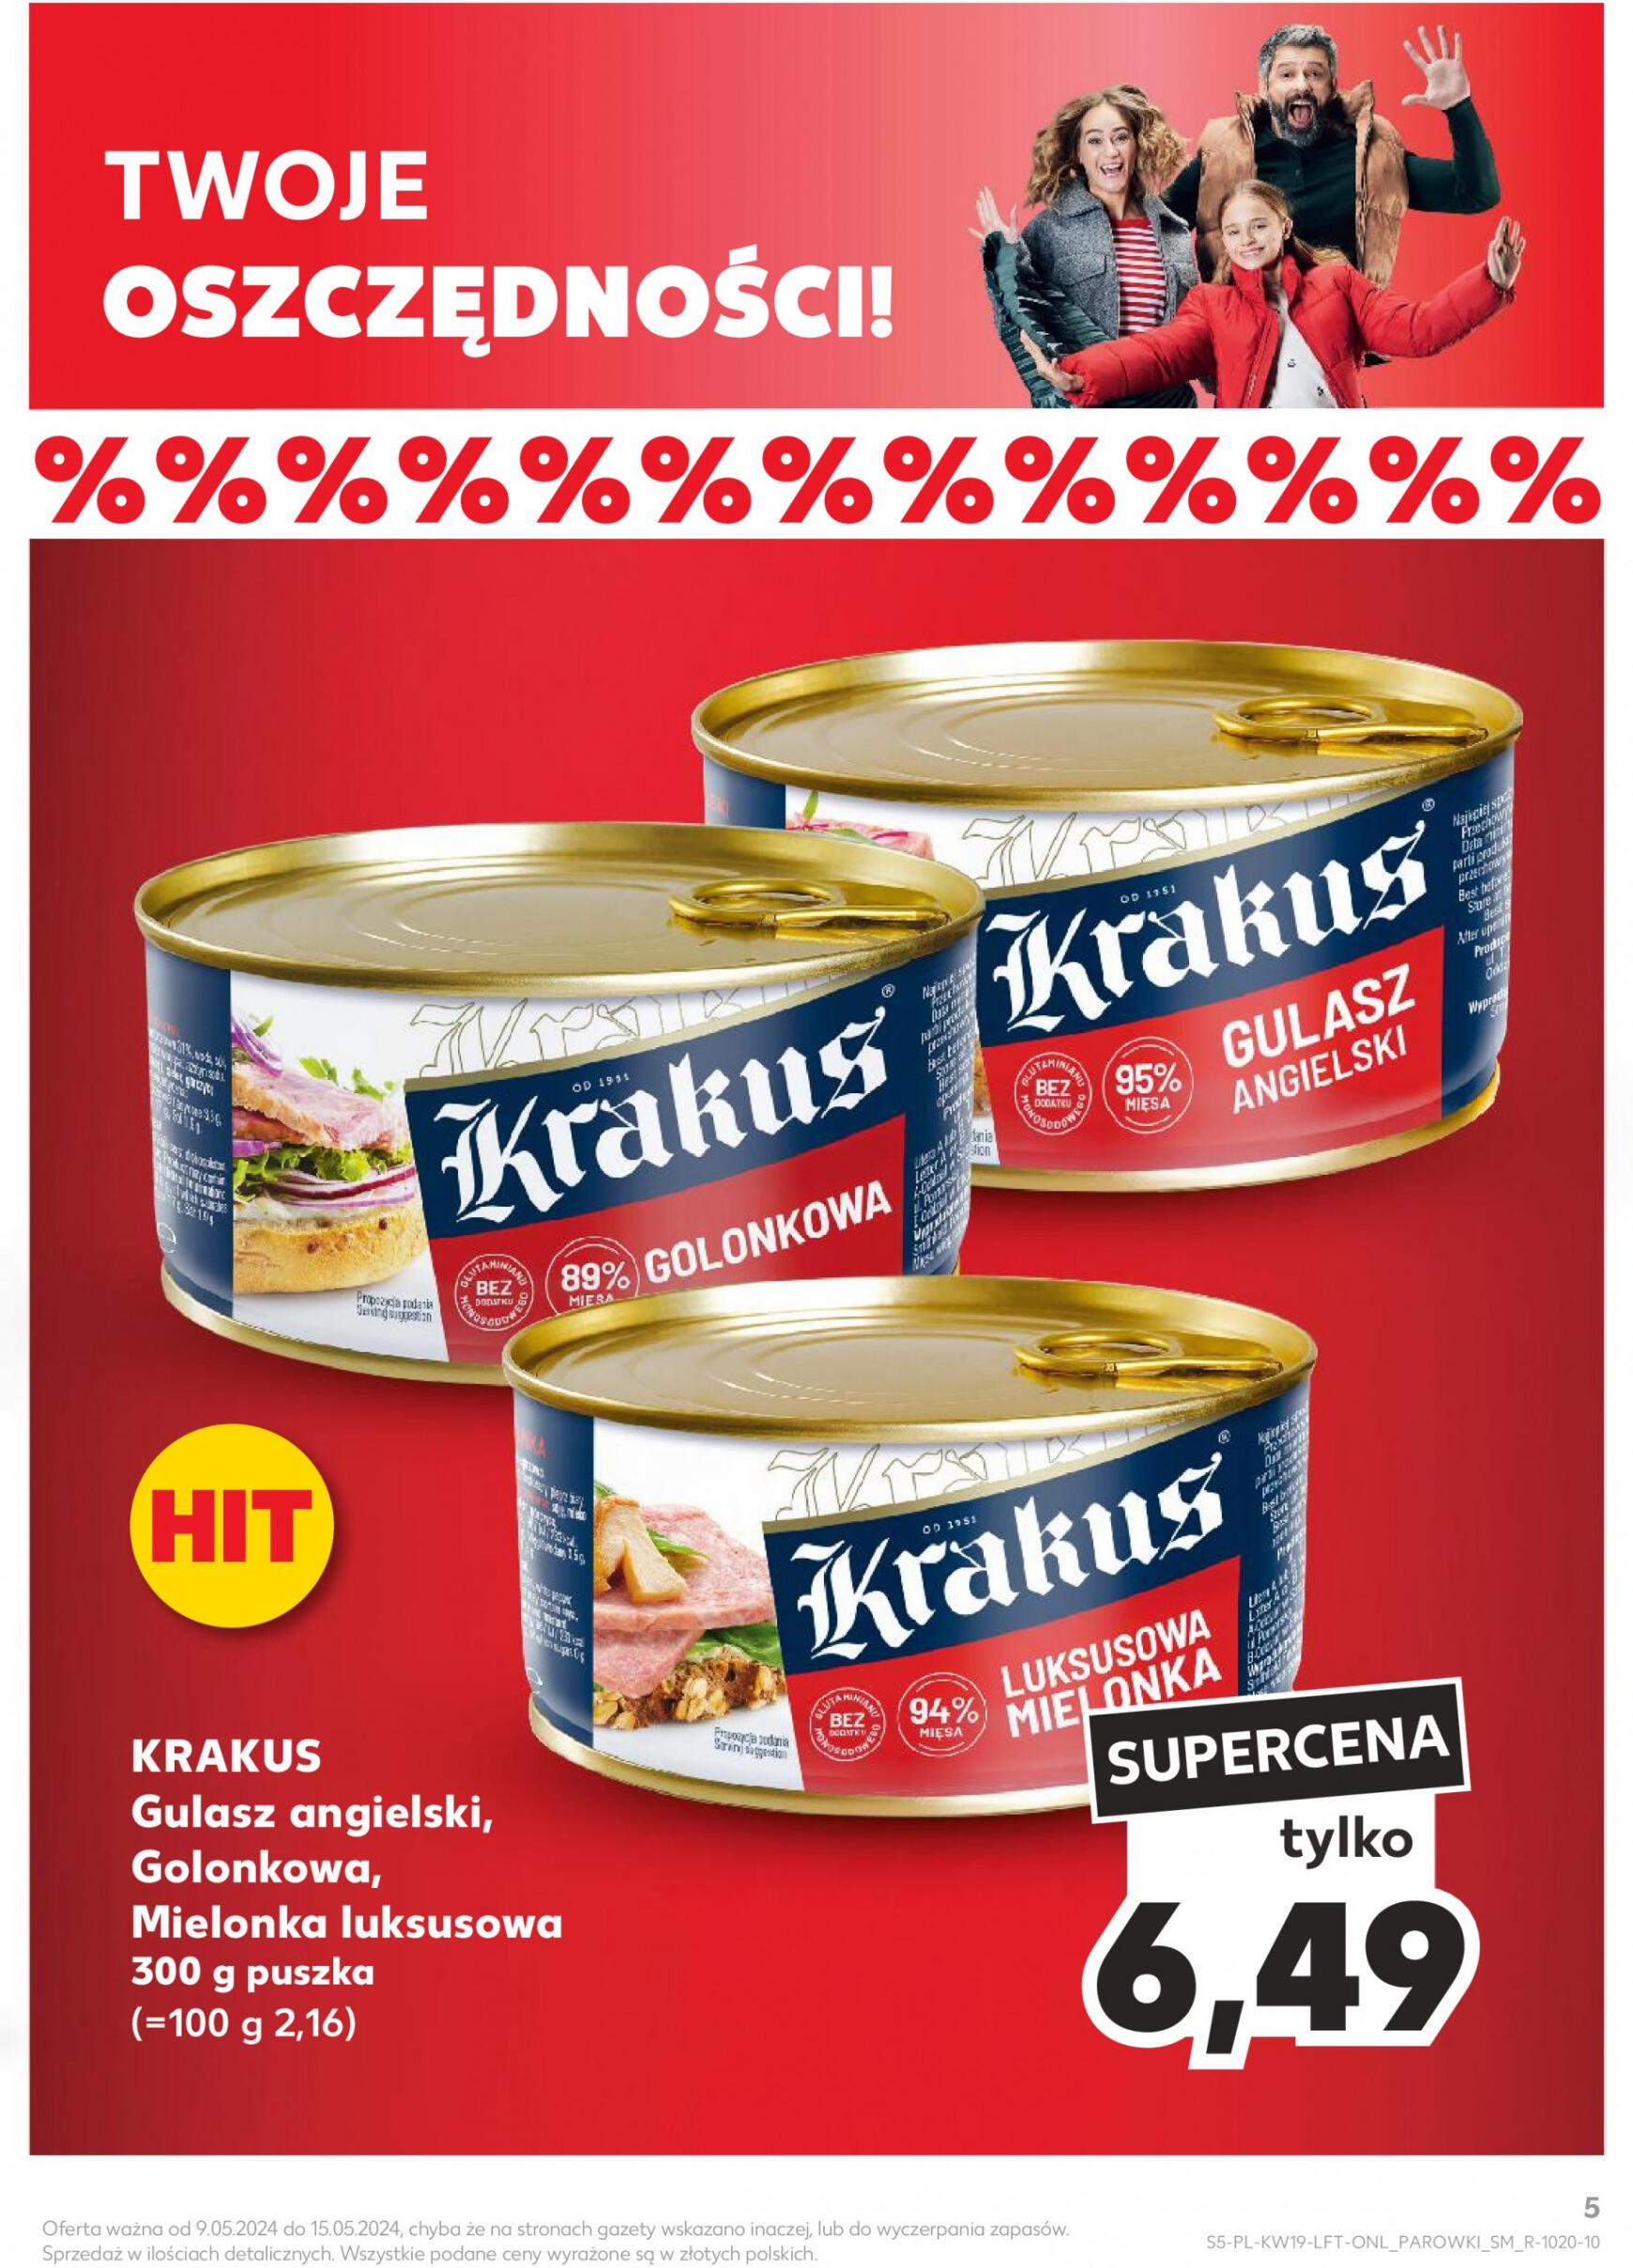 kaufland - Kaufland gazetka aktualna ważna od 09.05. - 15.05. - page: 5